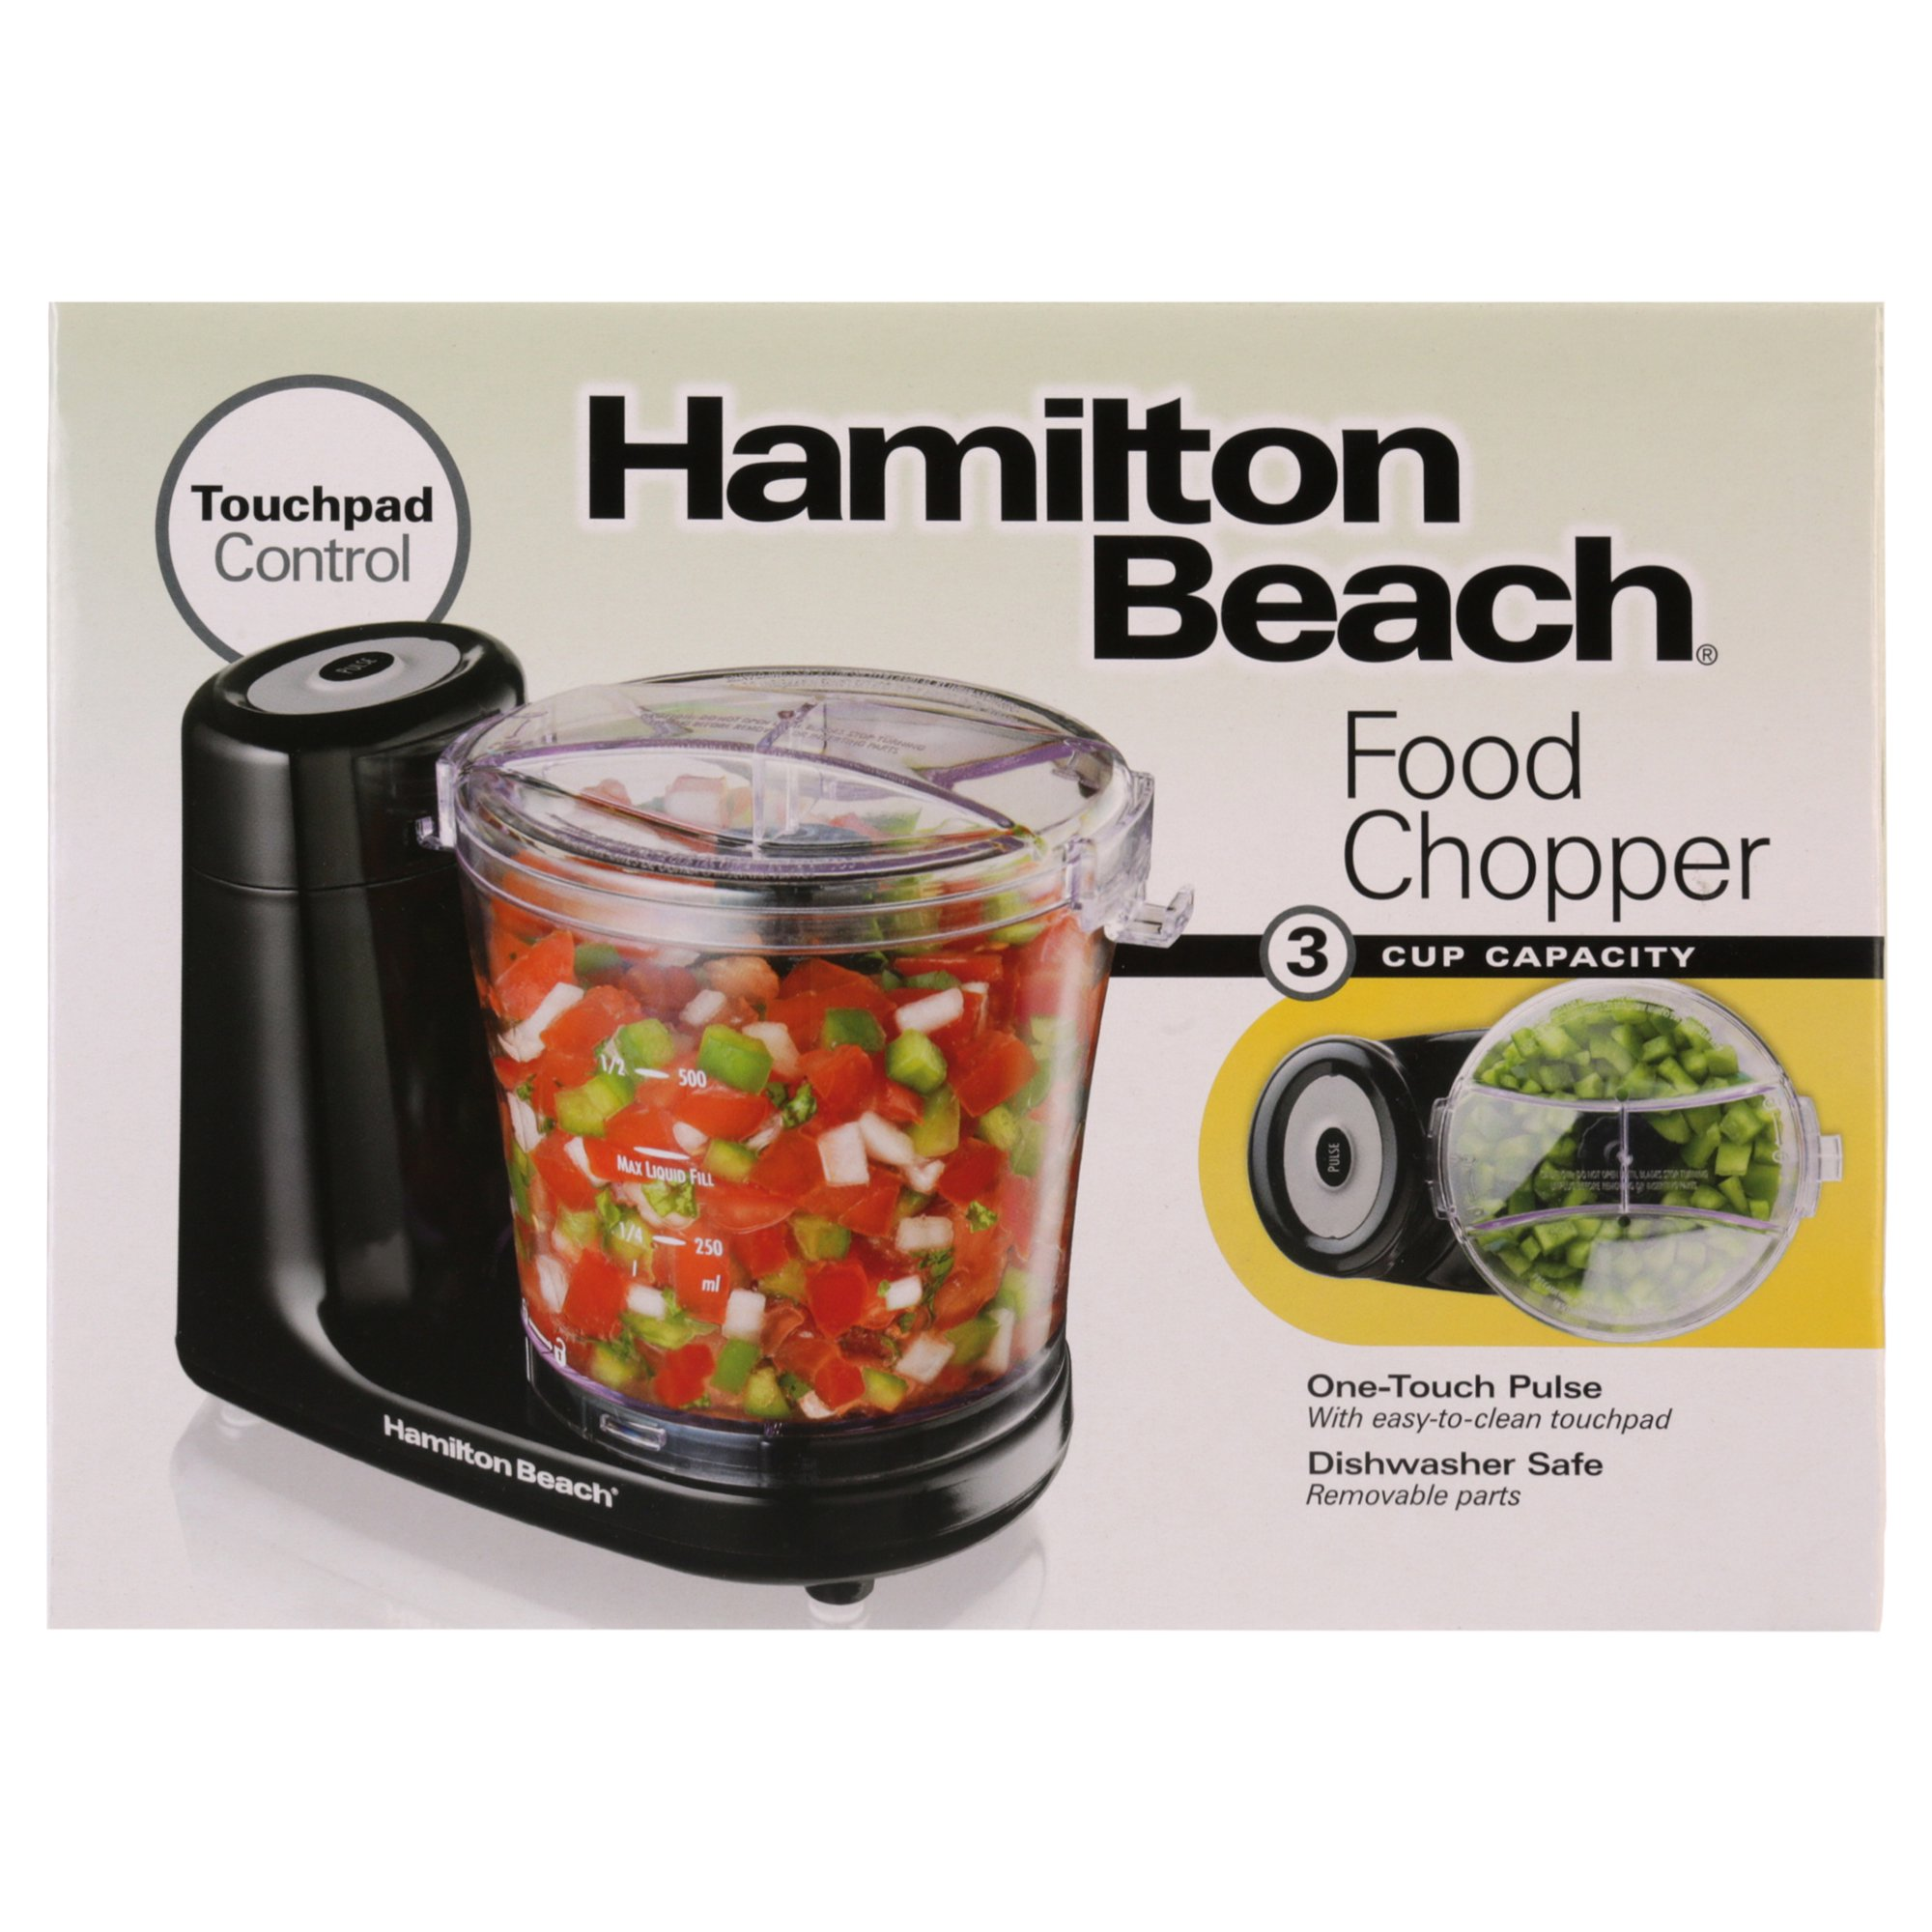 Hamilton Beach 3 Cup Touchpad Food Chopper, Model# 72900